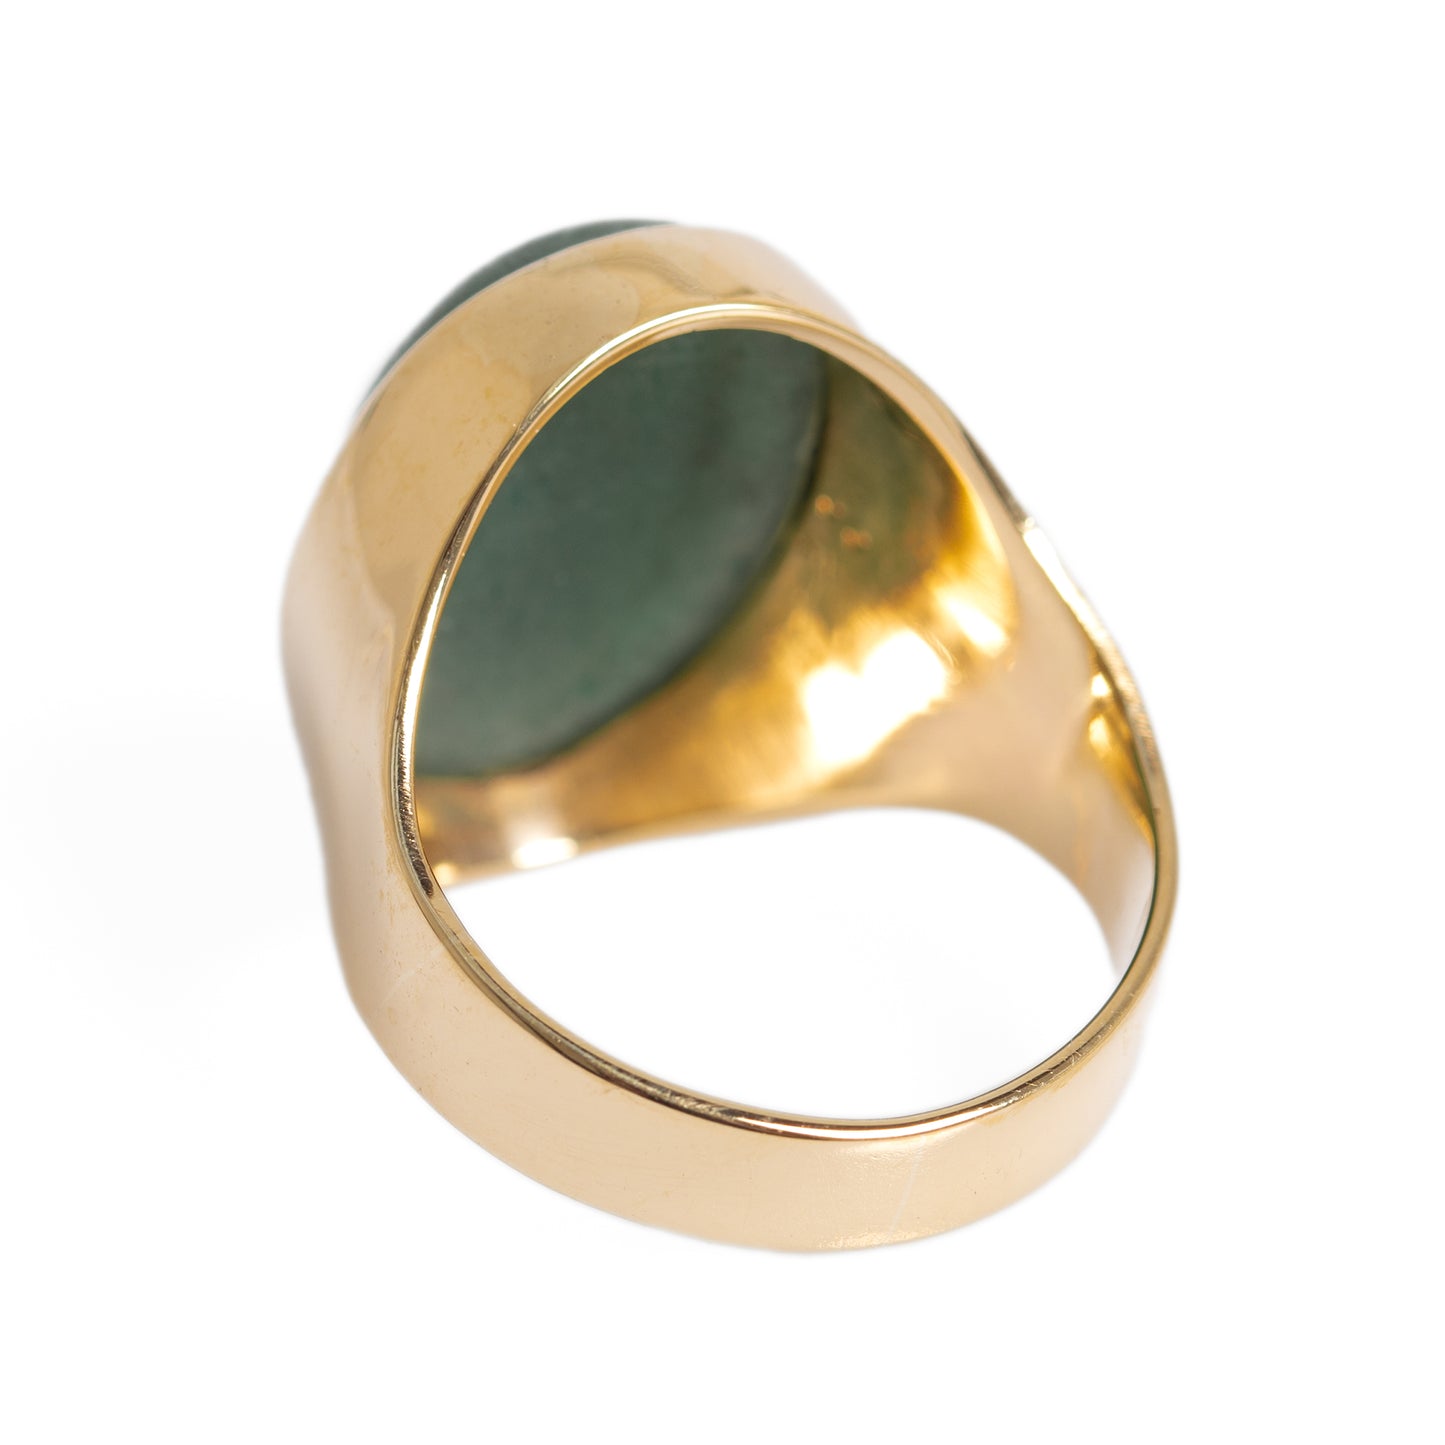 Vintage Large 9ct Gold & Green Jade (Jadeite) Cabochon Signet/Dress Ring c.1970 (A1287)